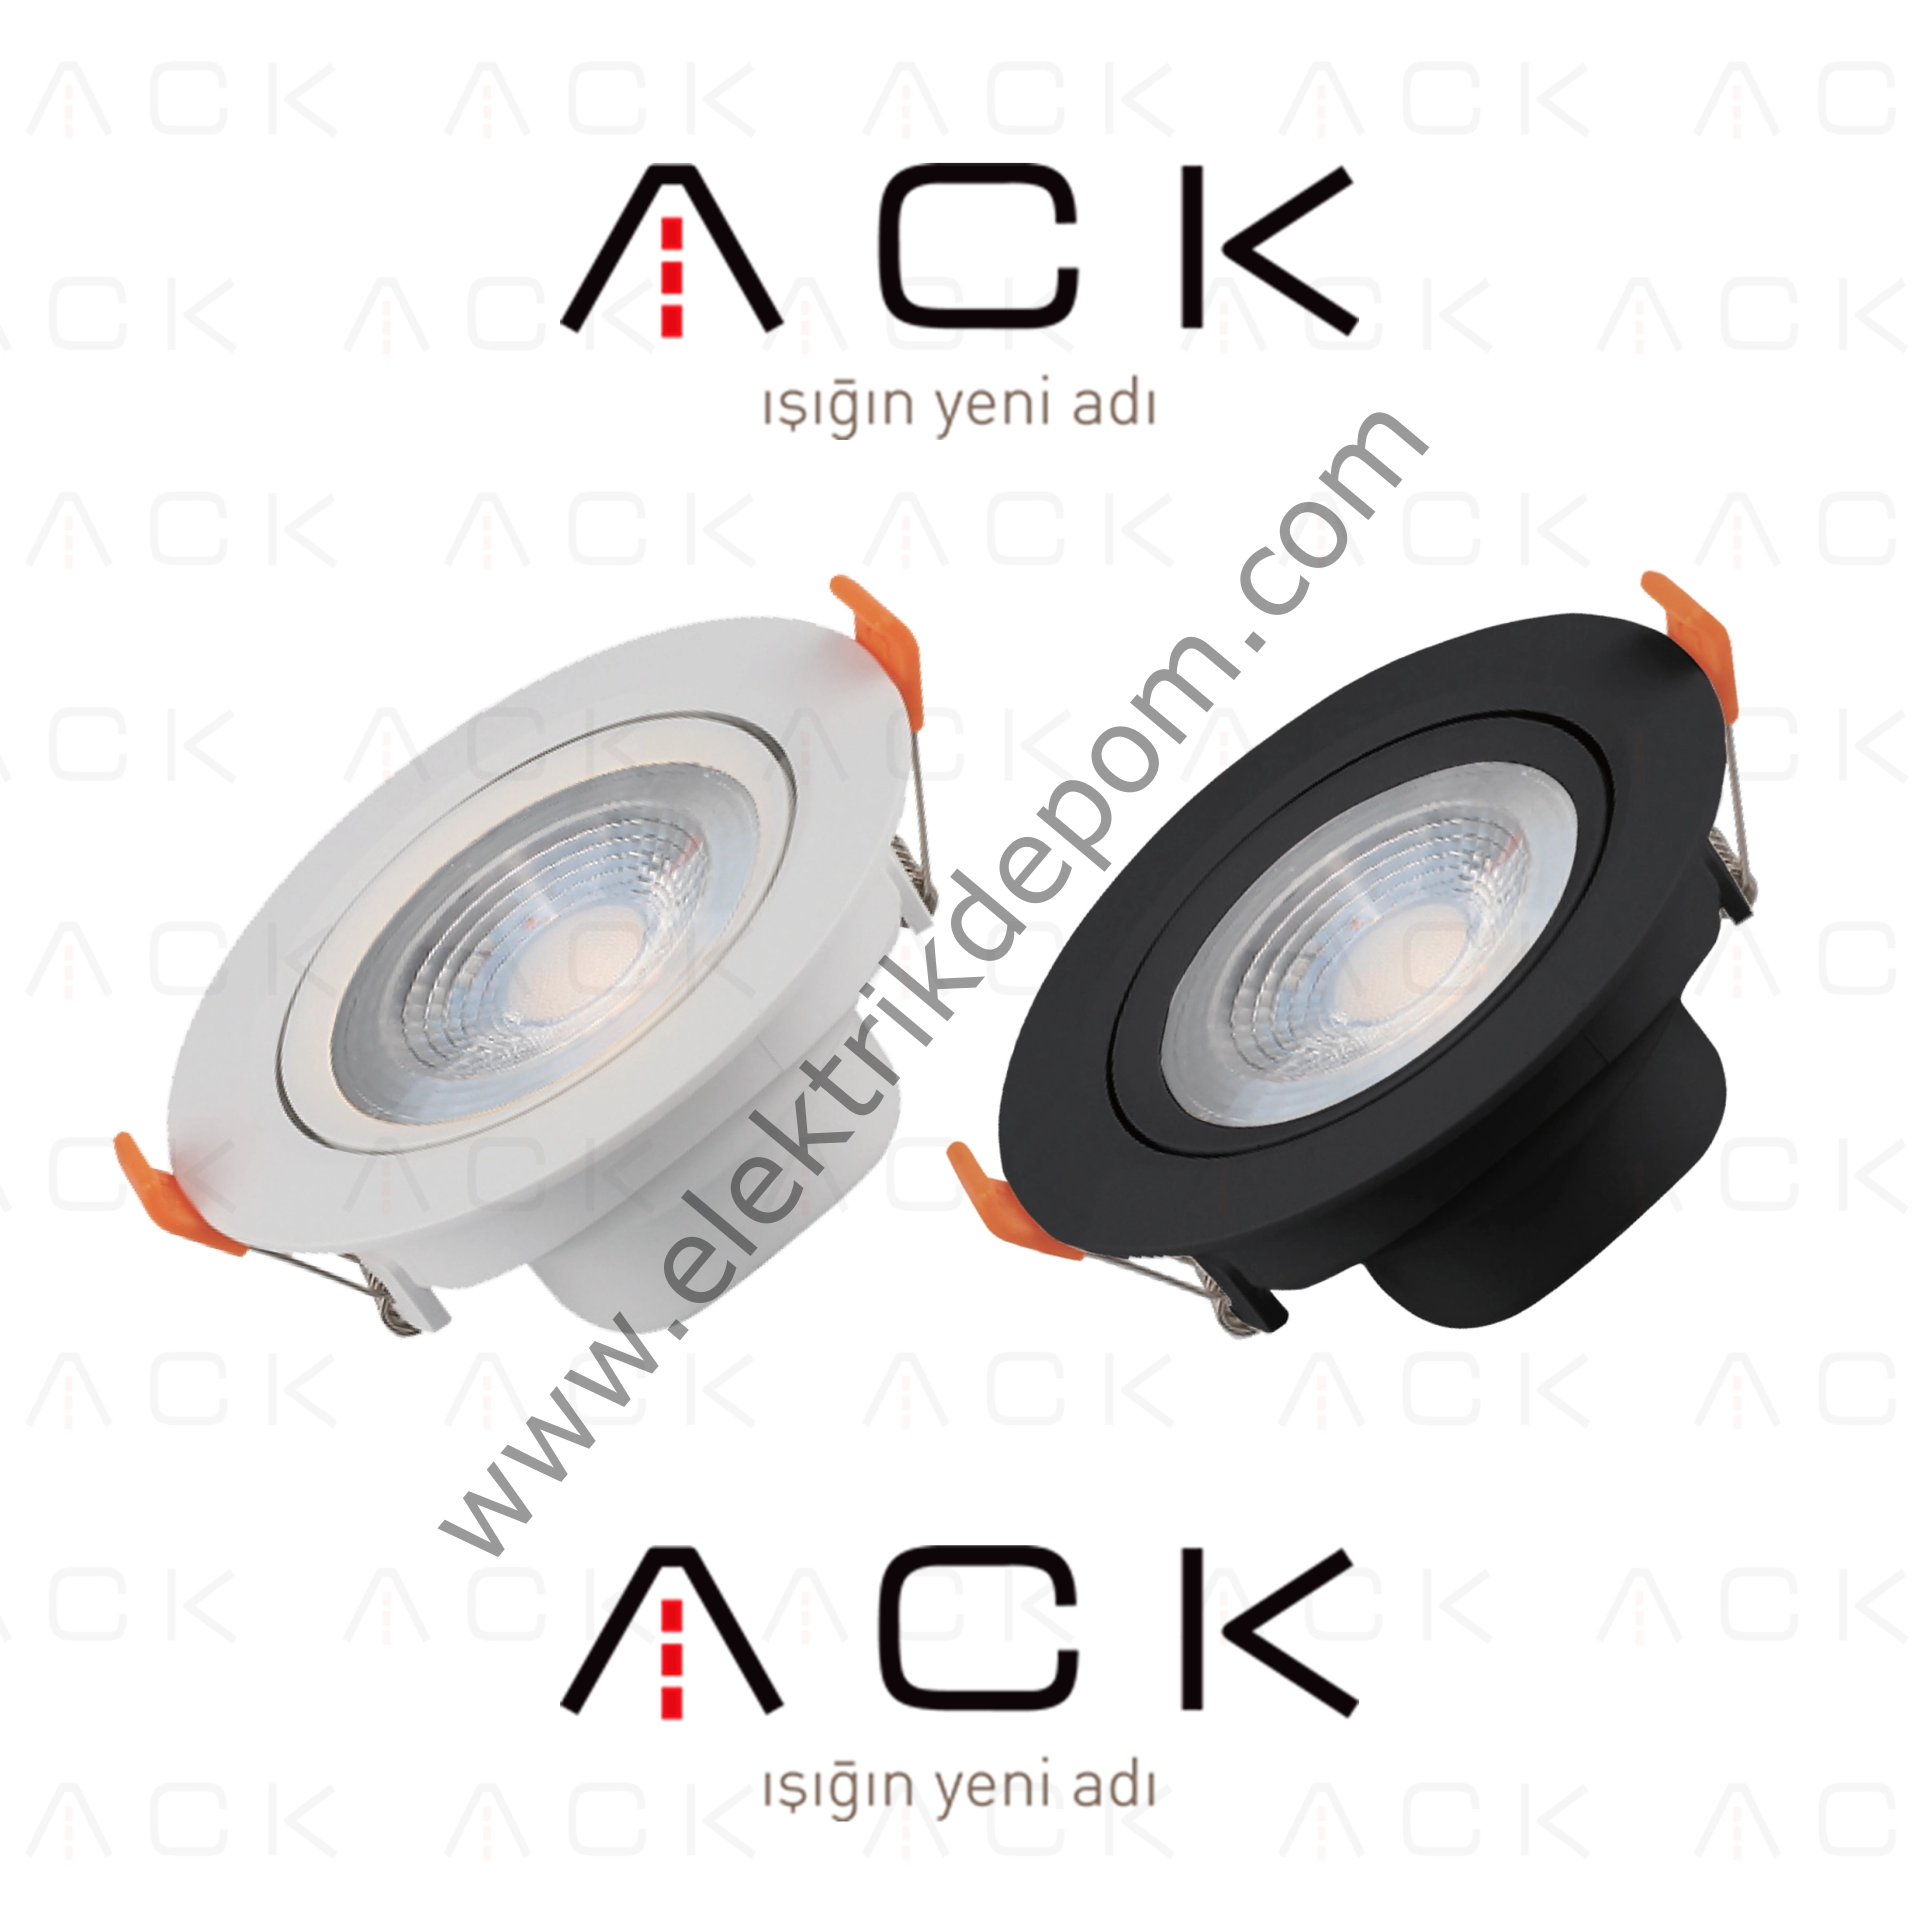 ACK 5 W LED COP SPOT - 3000K - 360LM